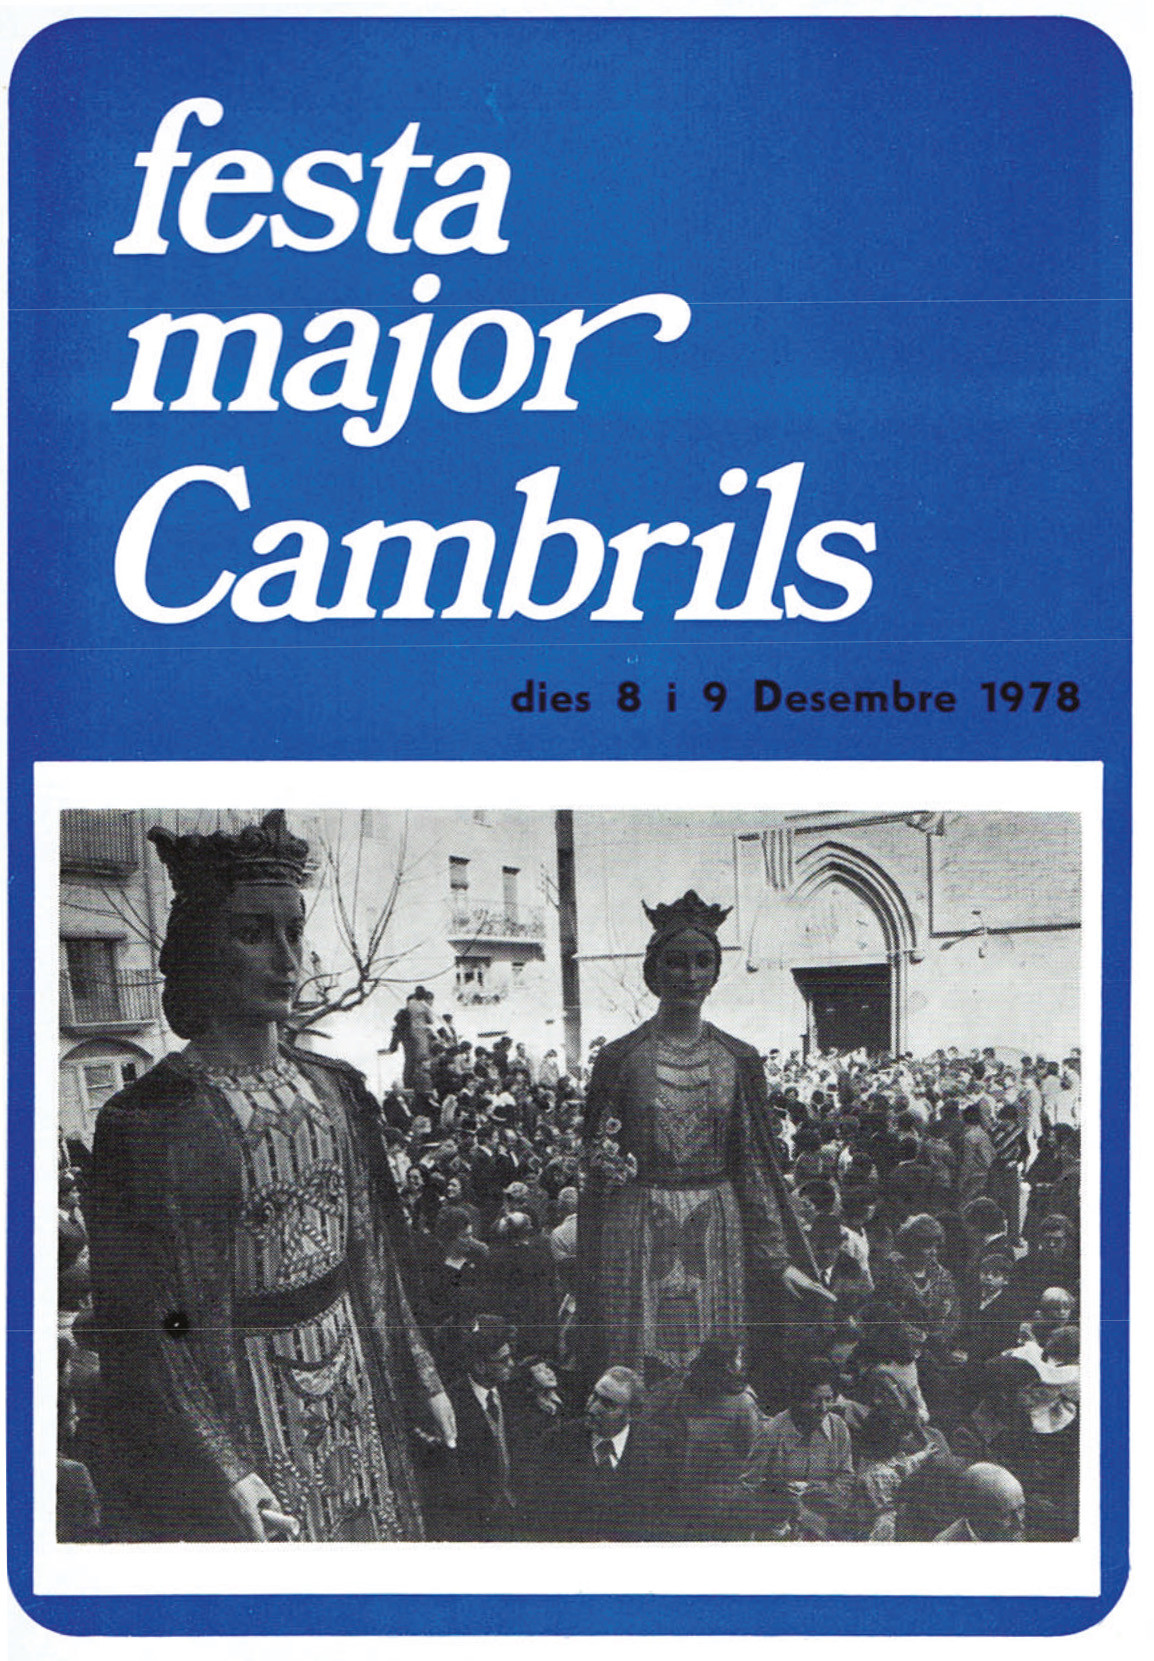 festa major immaculada cambrils 1978